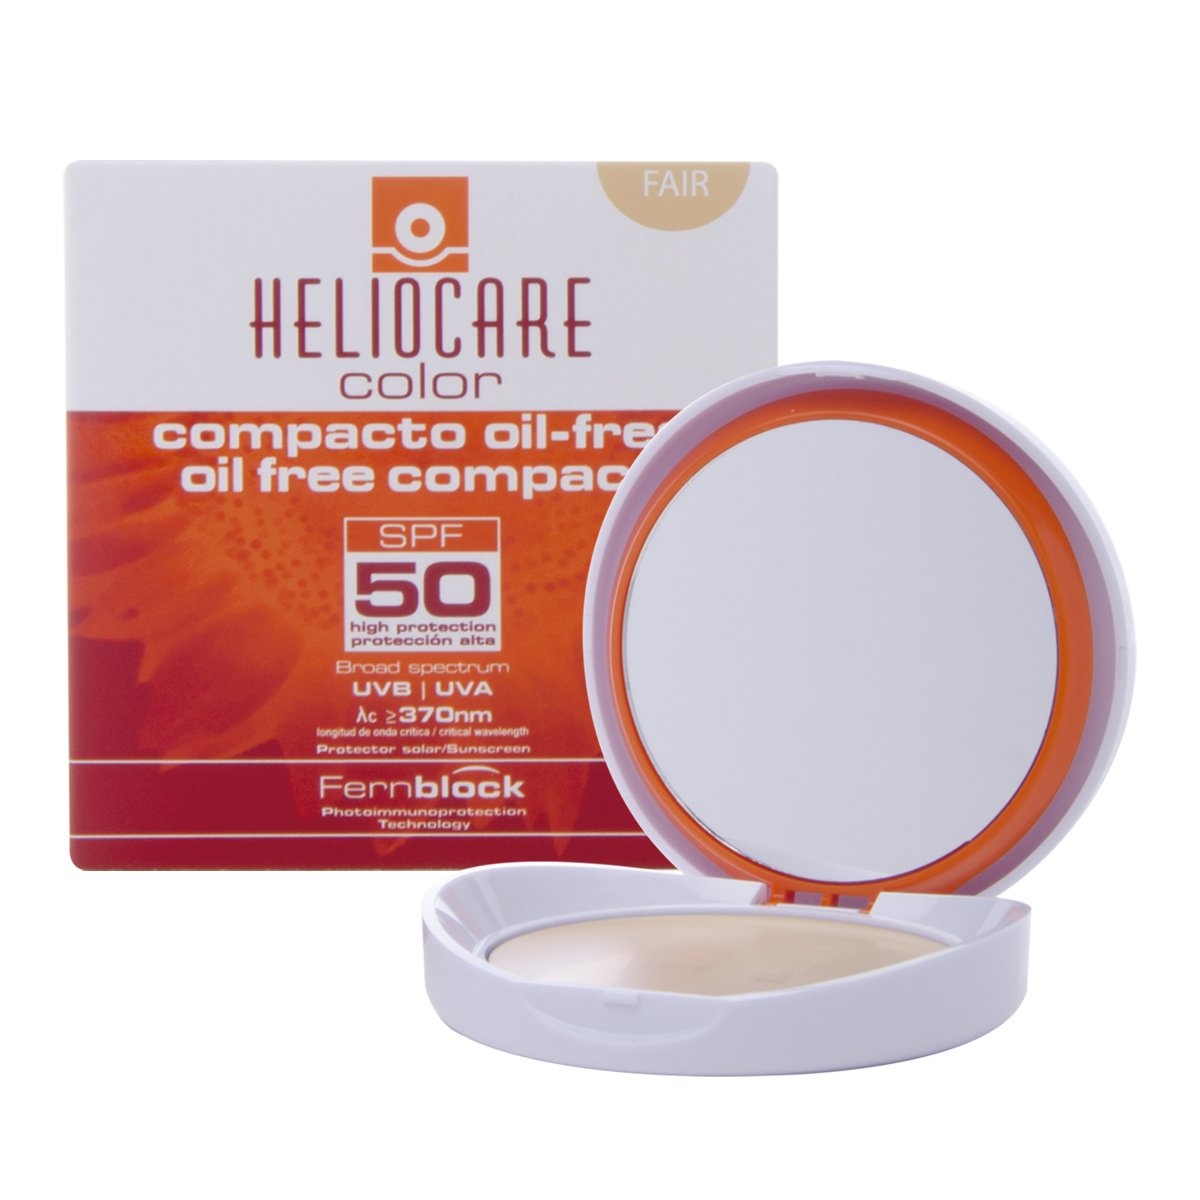 HELIOCARE COMPACTO FREE FAIR 50+ 10 GR